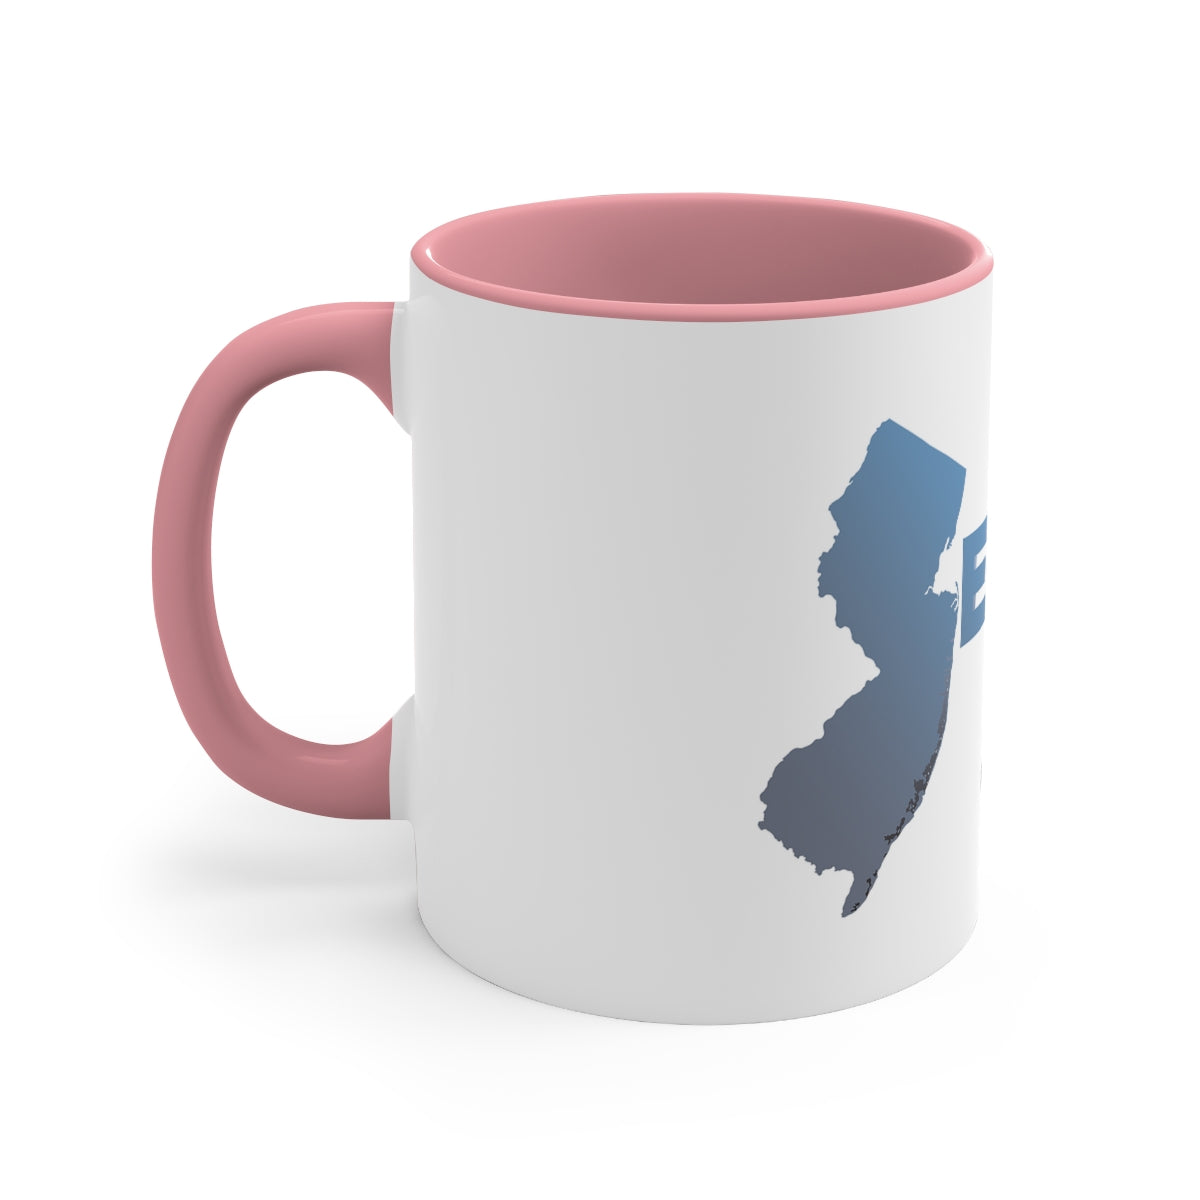 Jersey Born - Accent Coffee Mug, 11oz